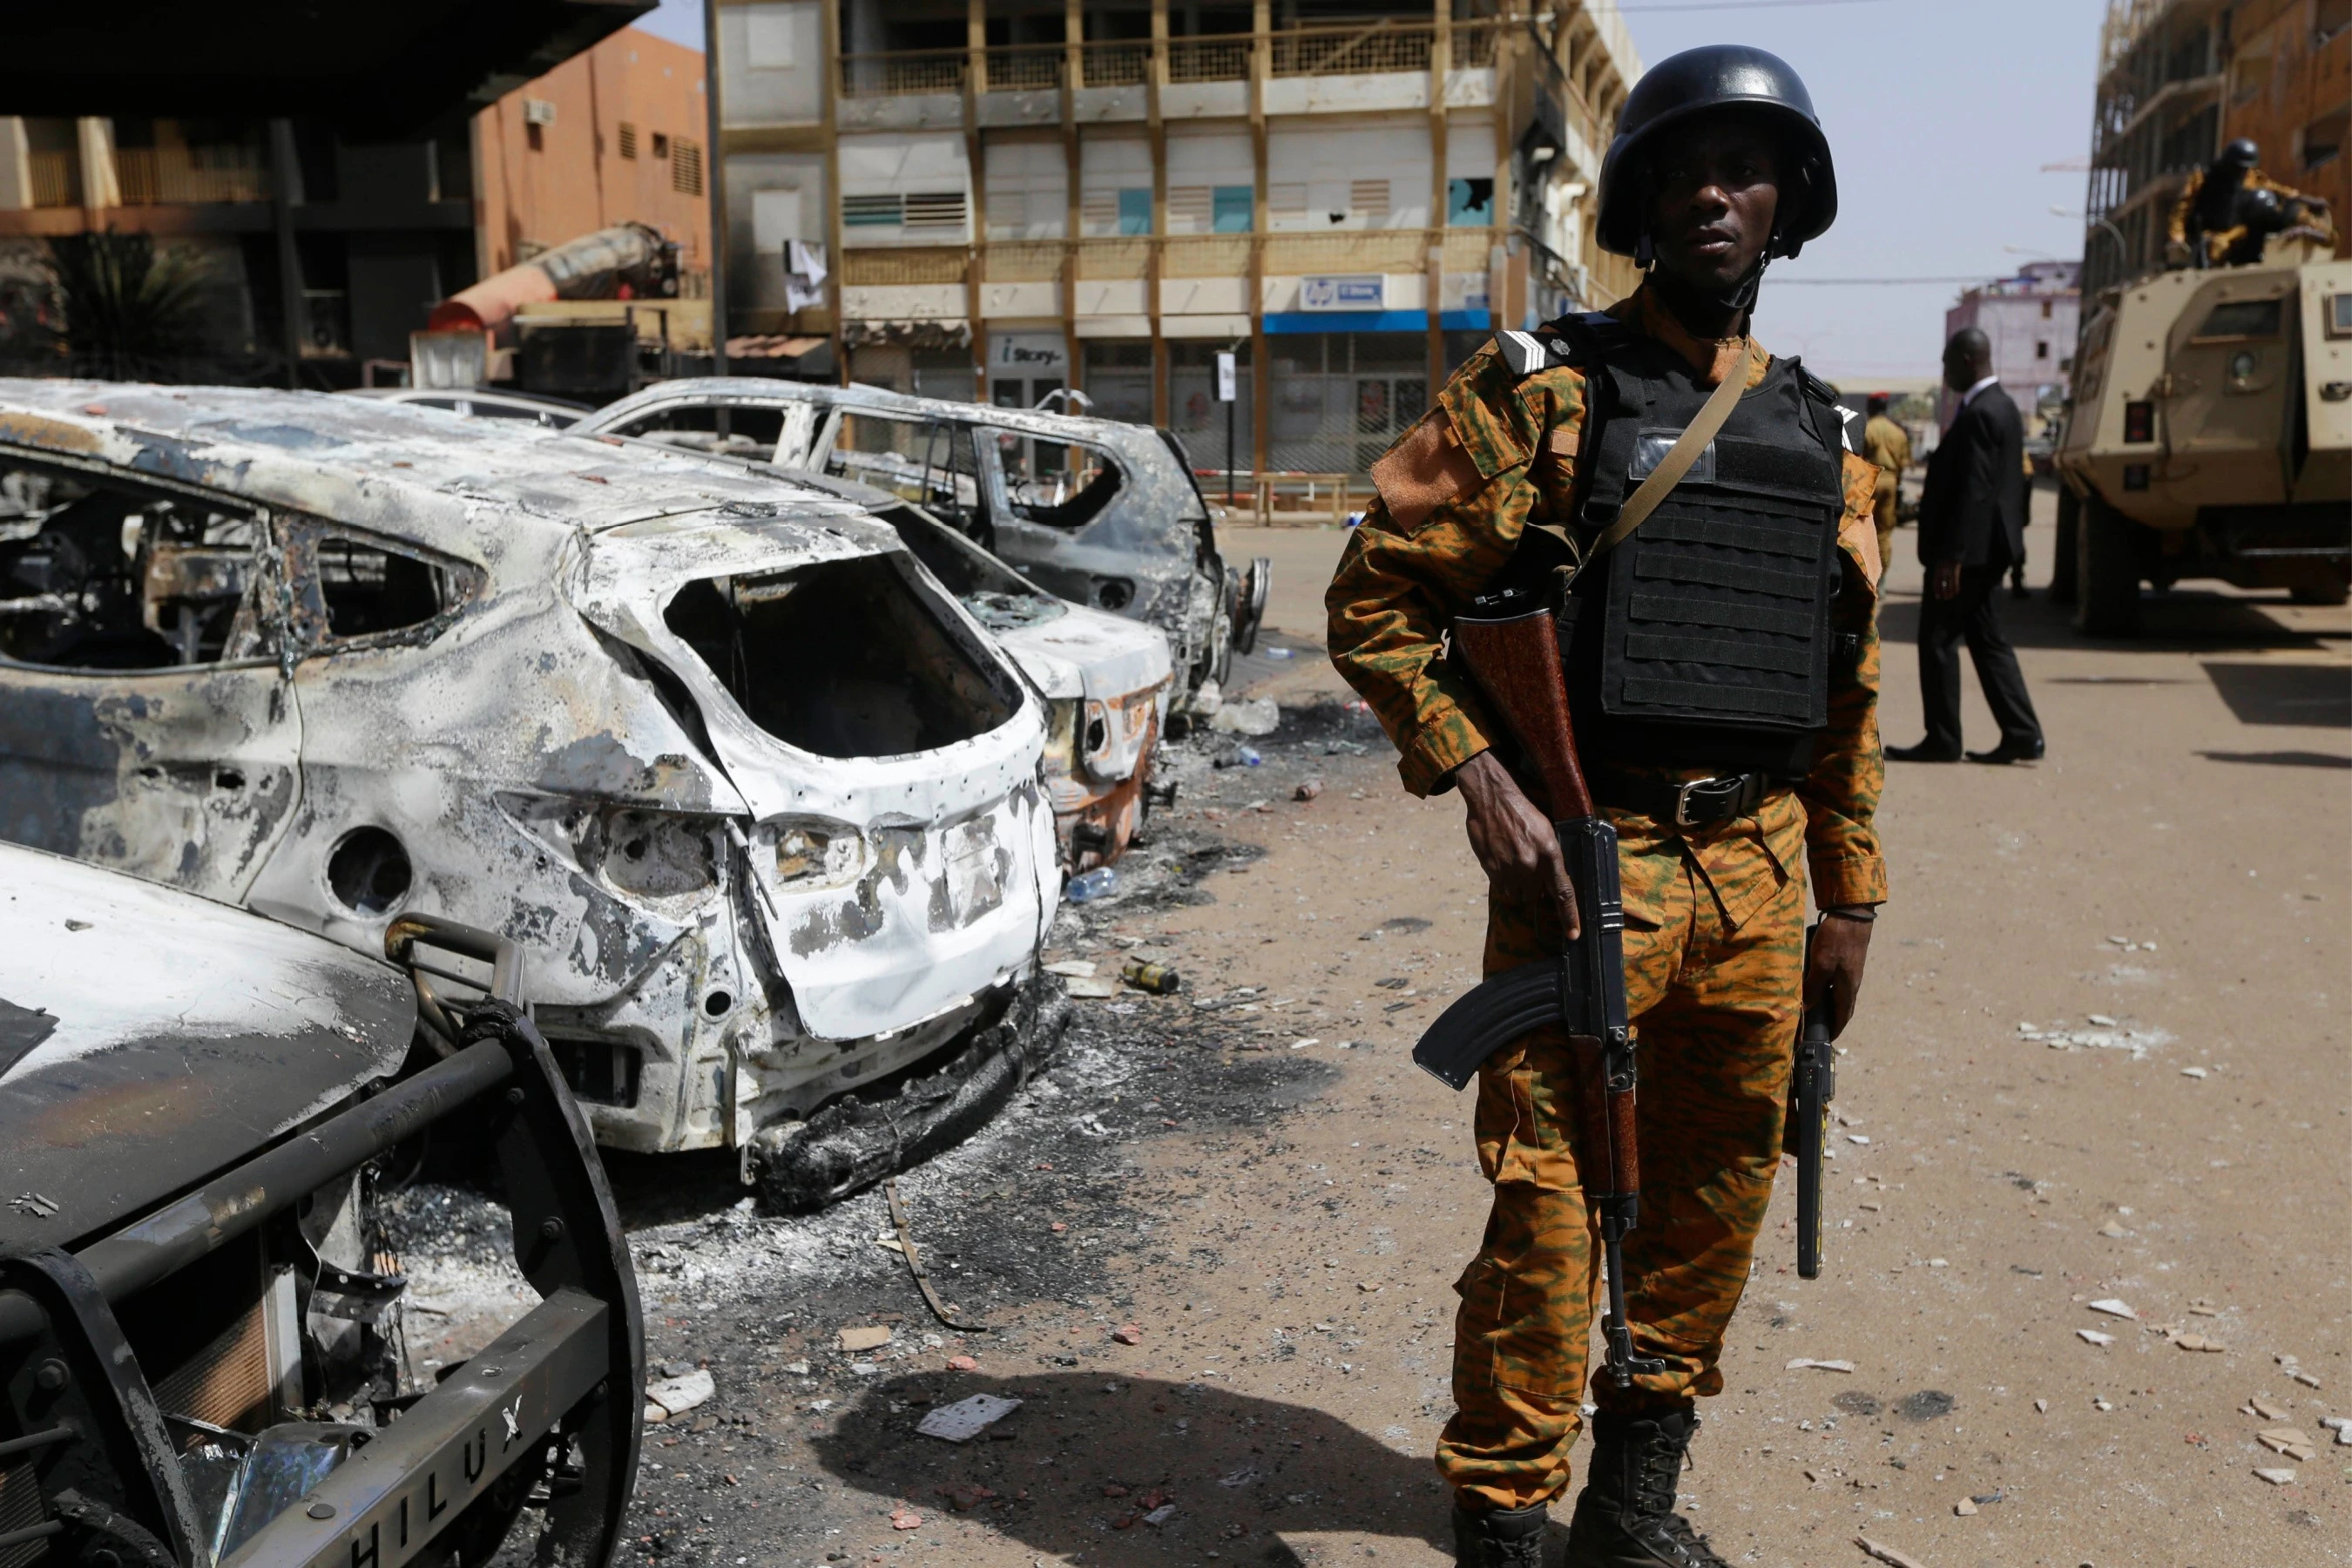 Grupos de ISIS se fortalecen en África provocando muertes en países subsaharianos. Foto: gentileza.